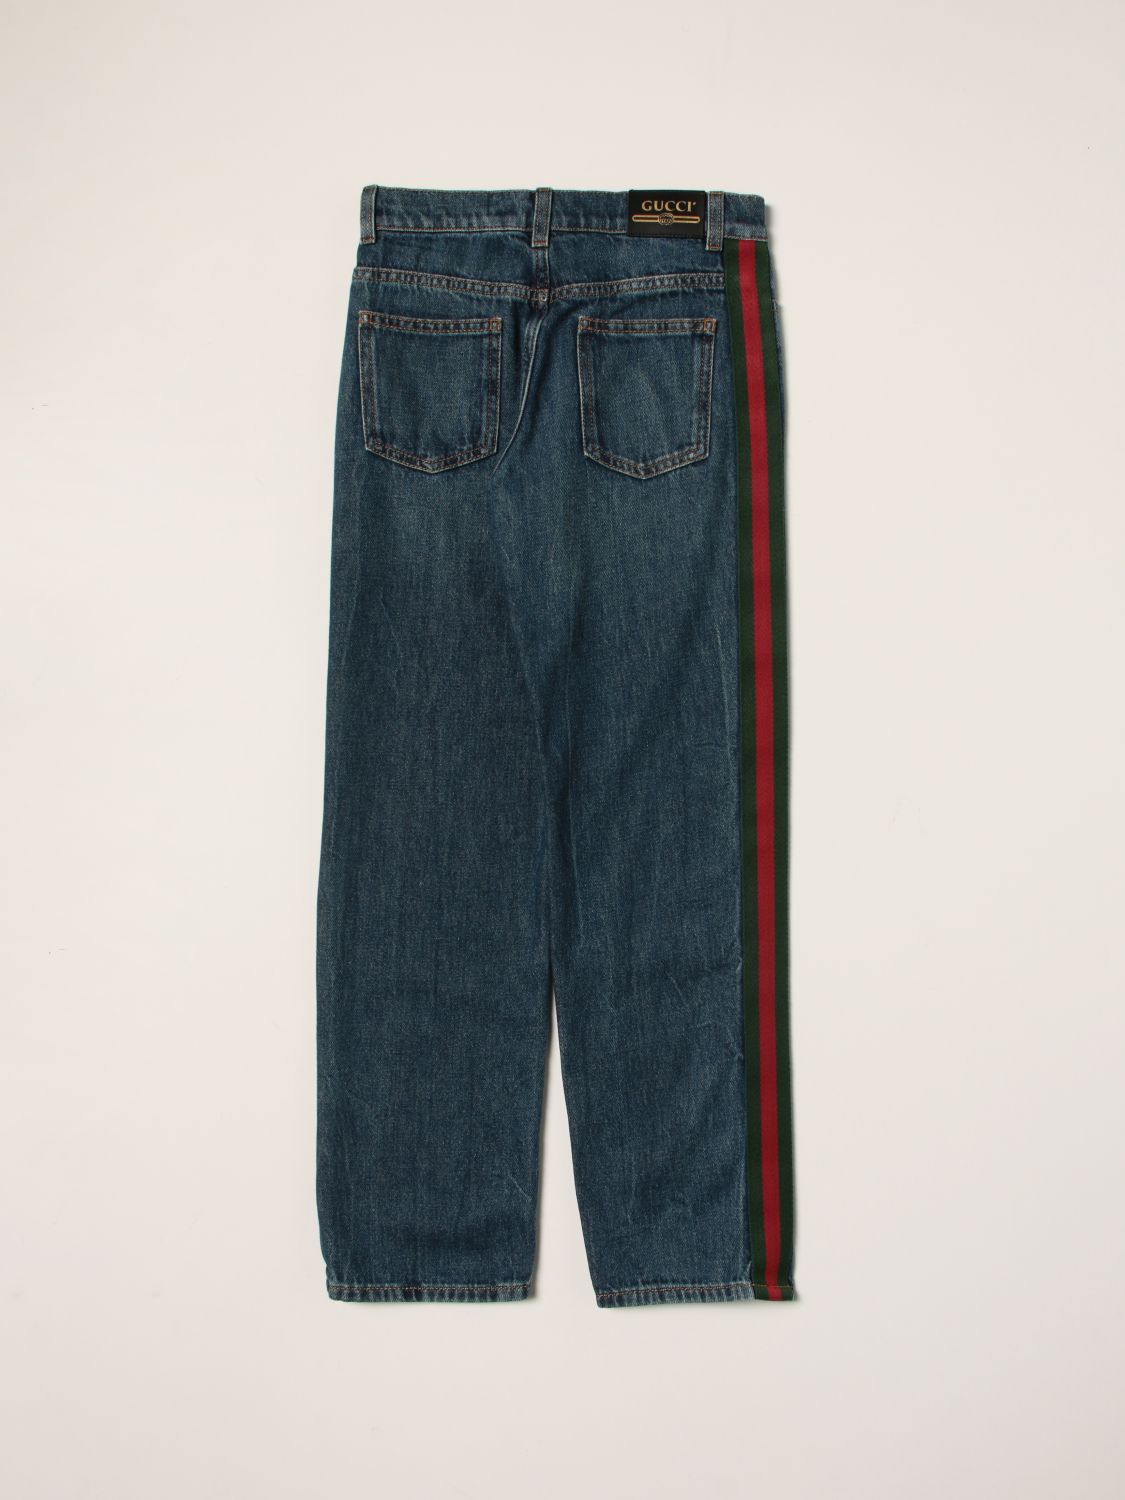 Jeans Gucci: Gucci 5-pocket denim jeans with Web stripes denim 2